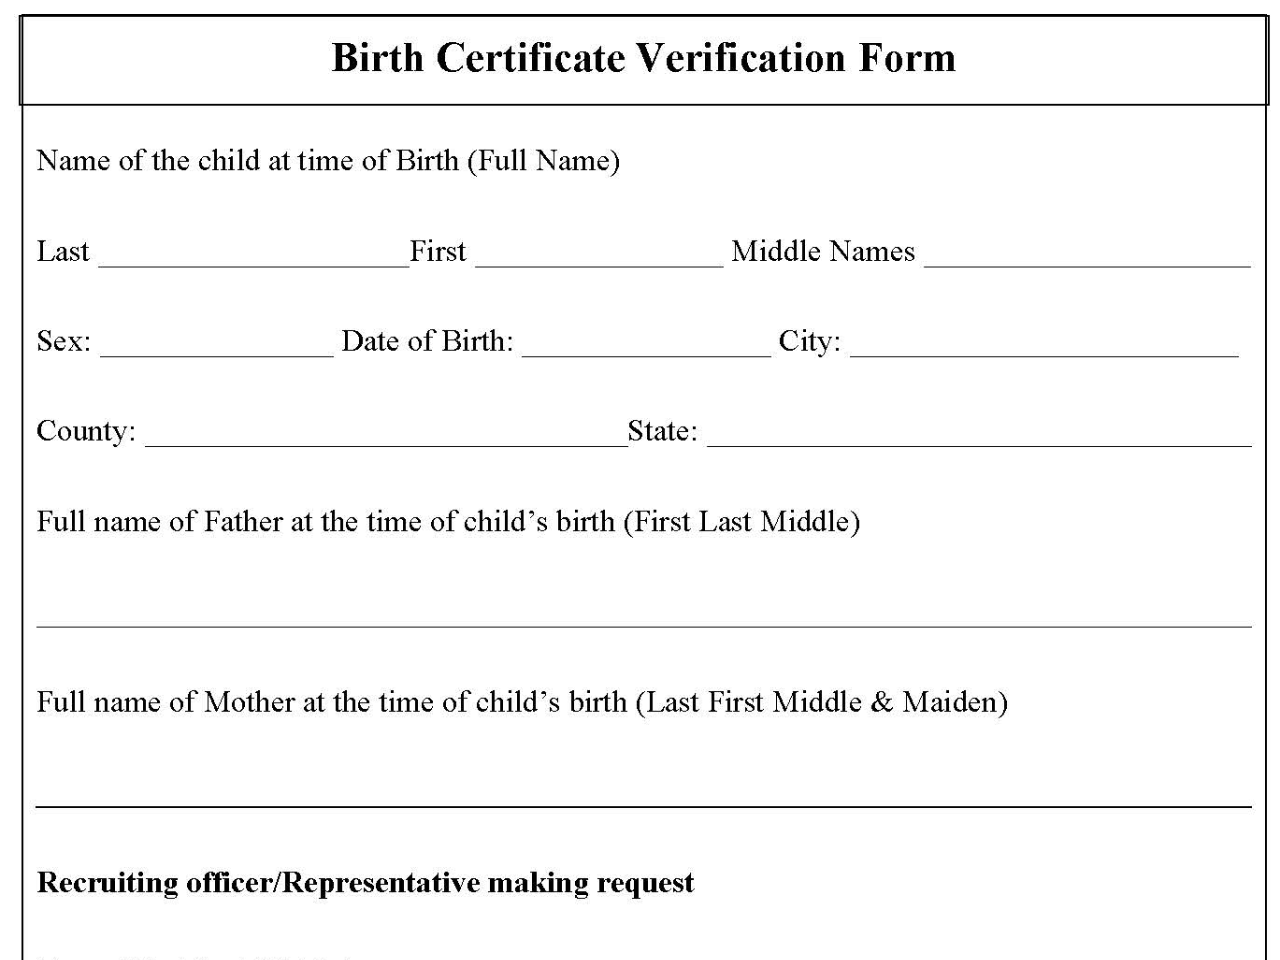 Birth Certificate Verification Form